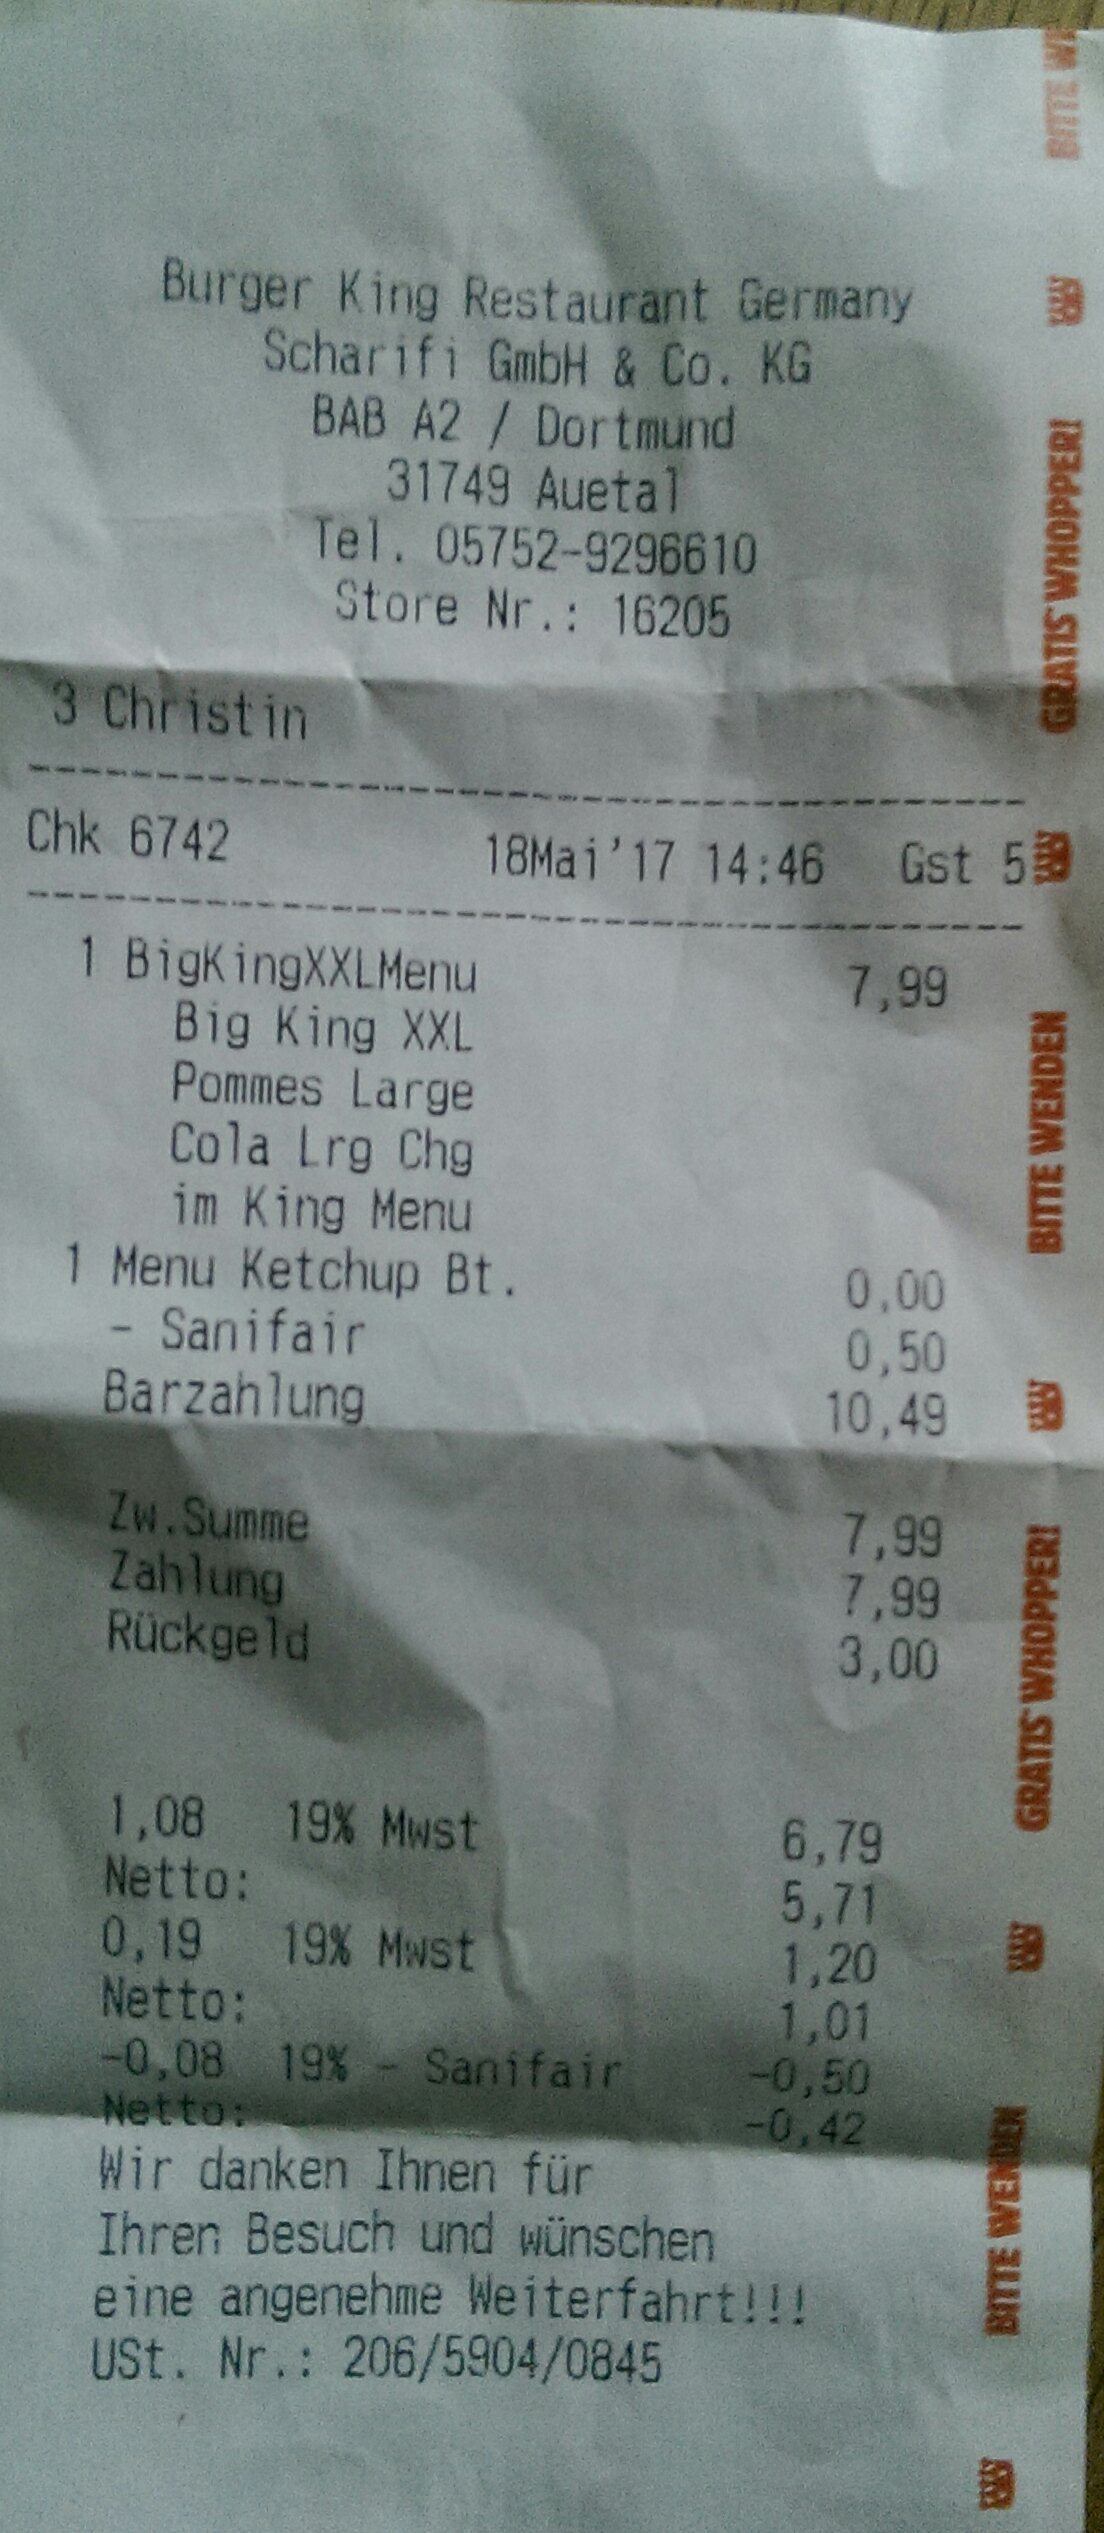 Bild 1 Burger King Restaurant Germany, Scharifi GmbH & Co. KG in Auetal